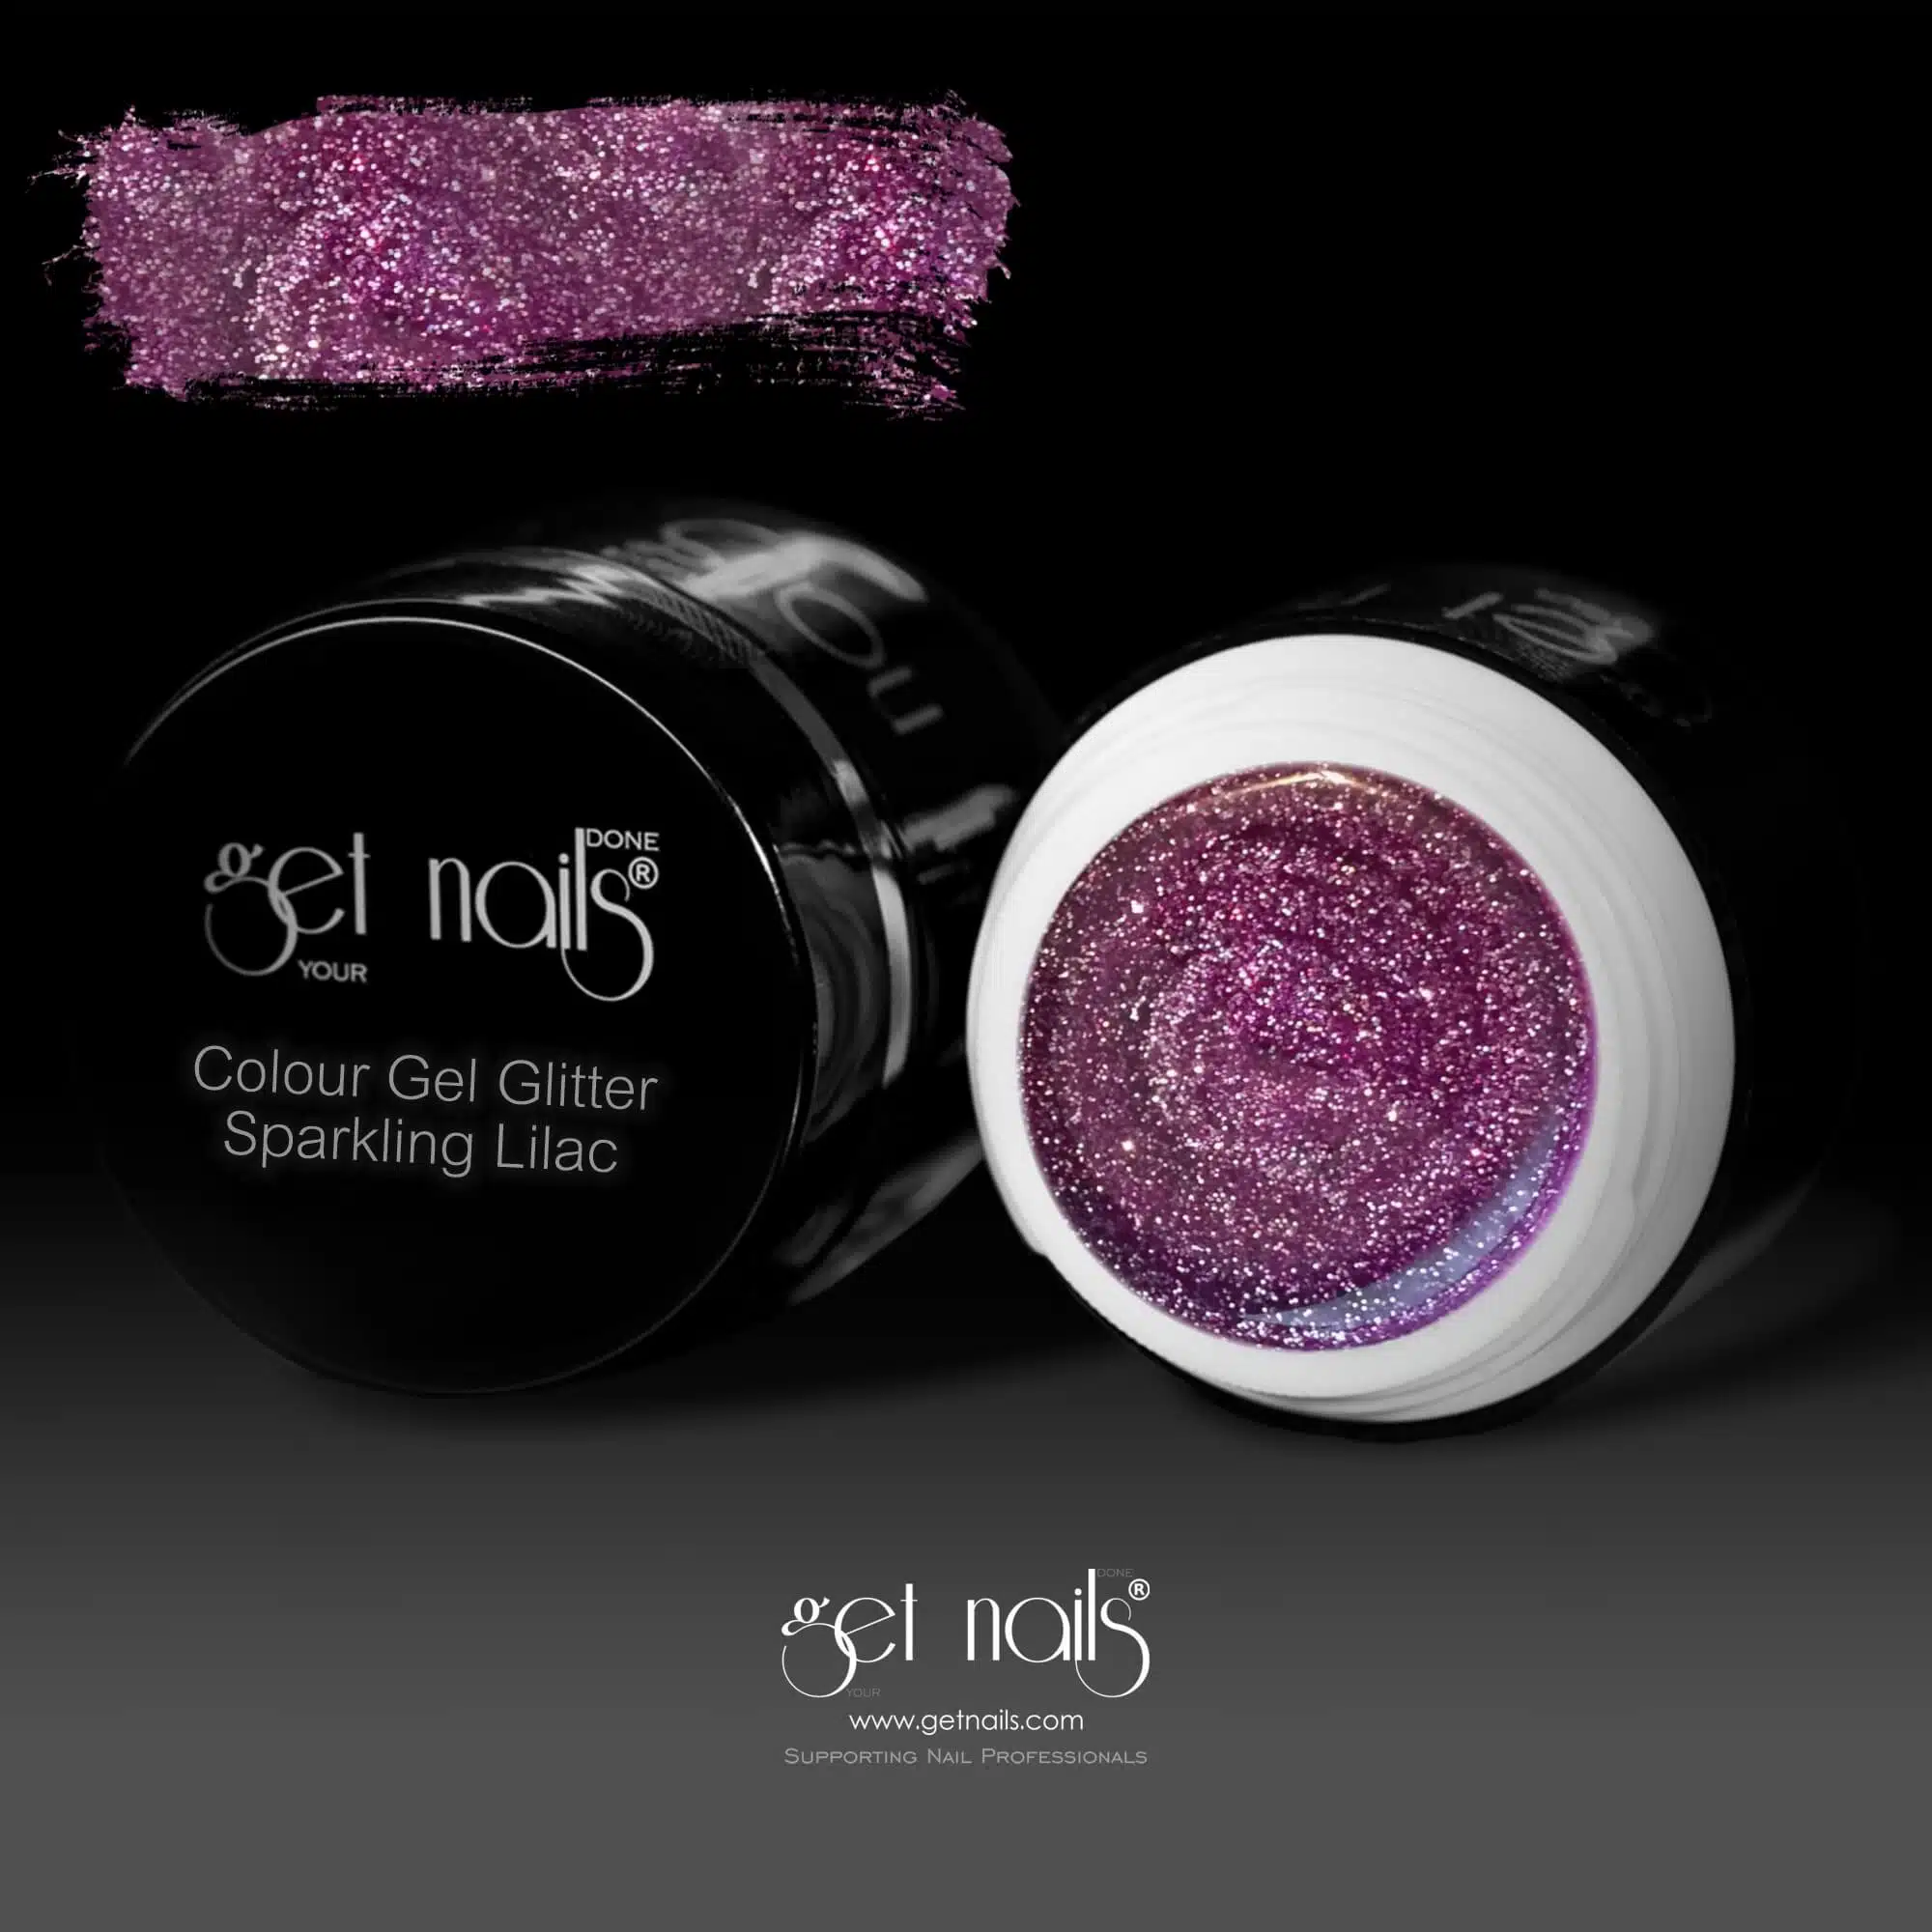 Get Nails Austria - Colour Gel Glitter Sparkling Lilac 5g